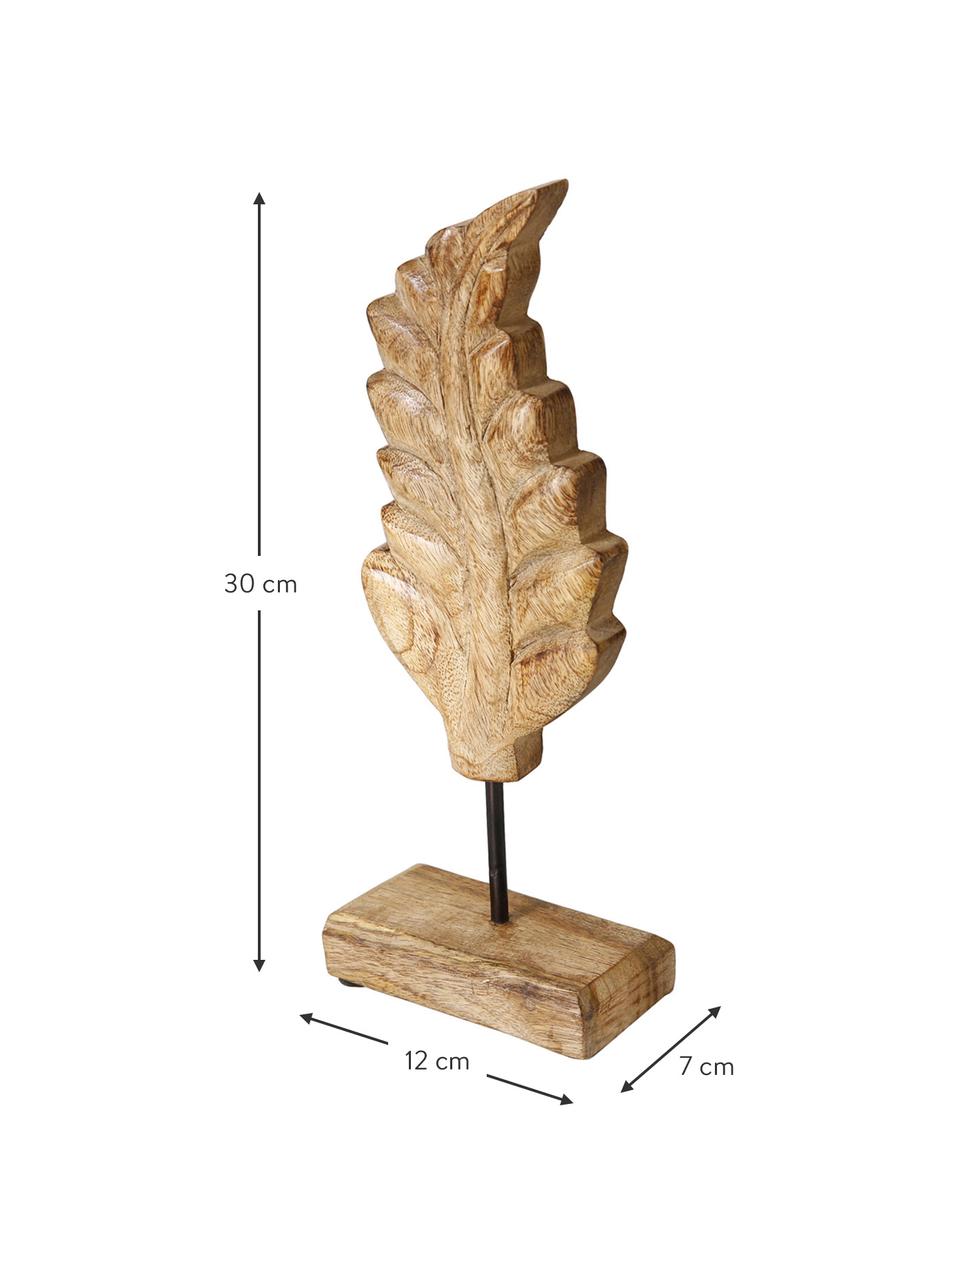 Sada dekorací Leaf, 3 díly, Dřevo, Hnědá, Š 12 cm, V 30 cm